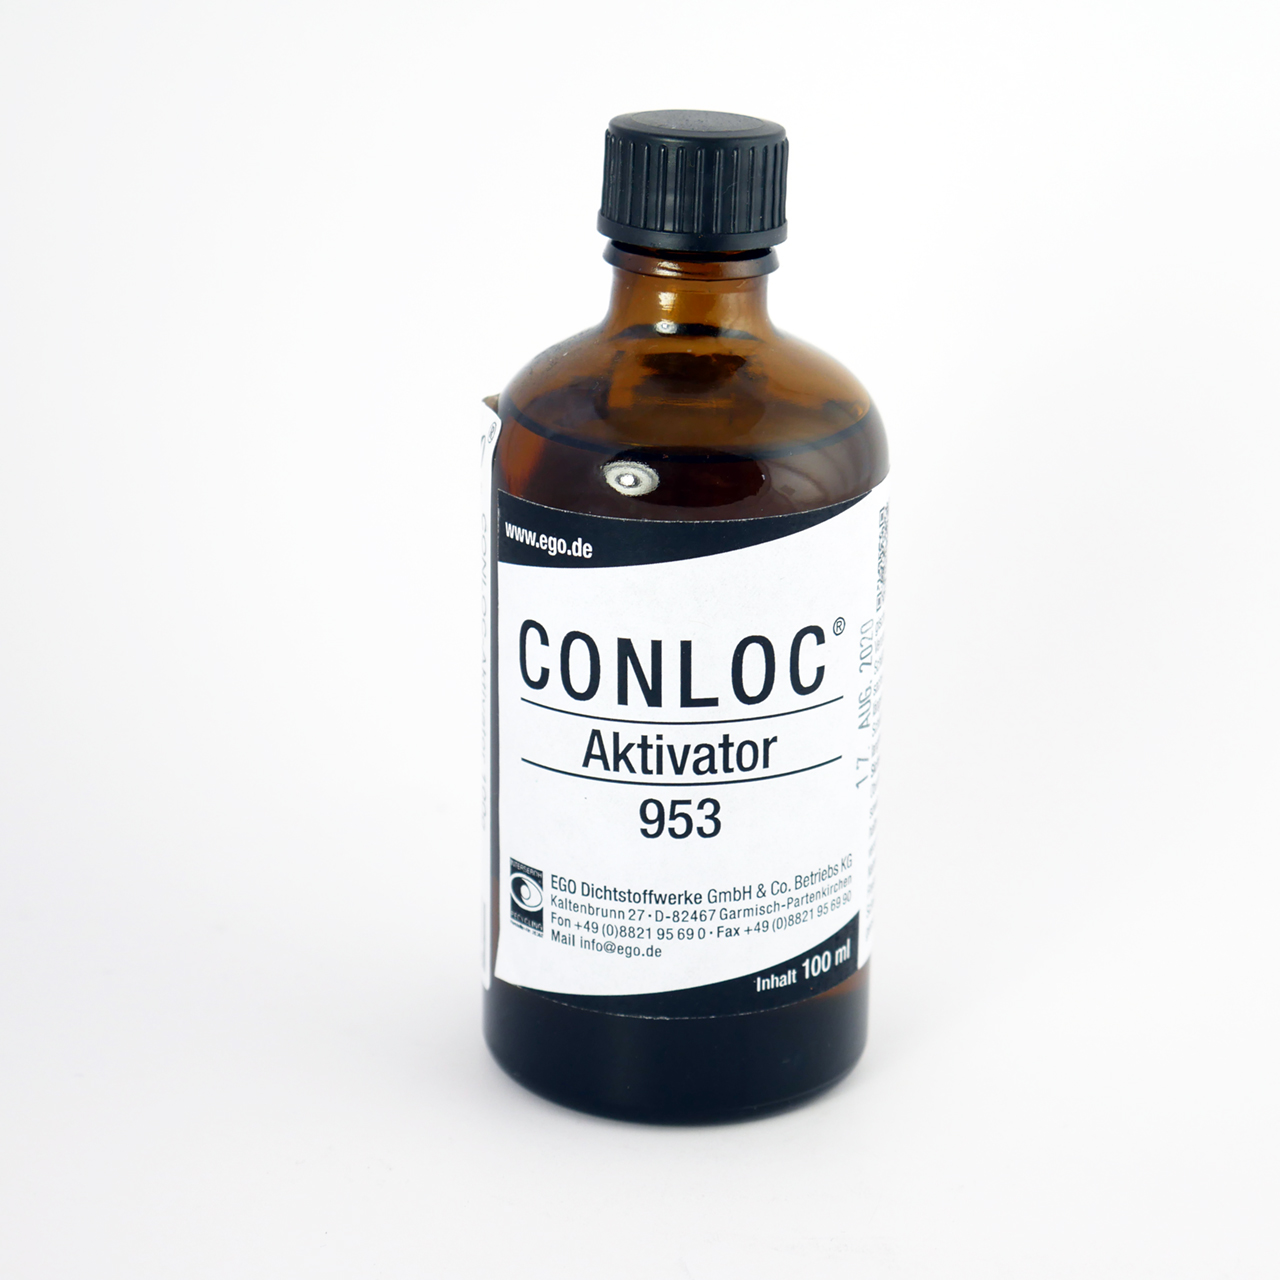 CONLOC-Aktivator 100g